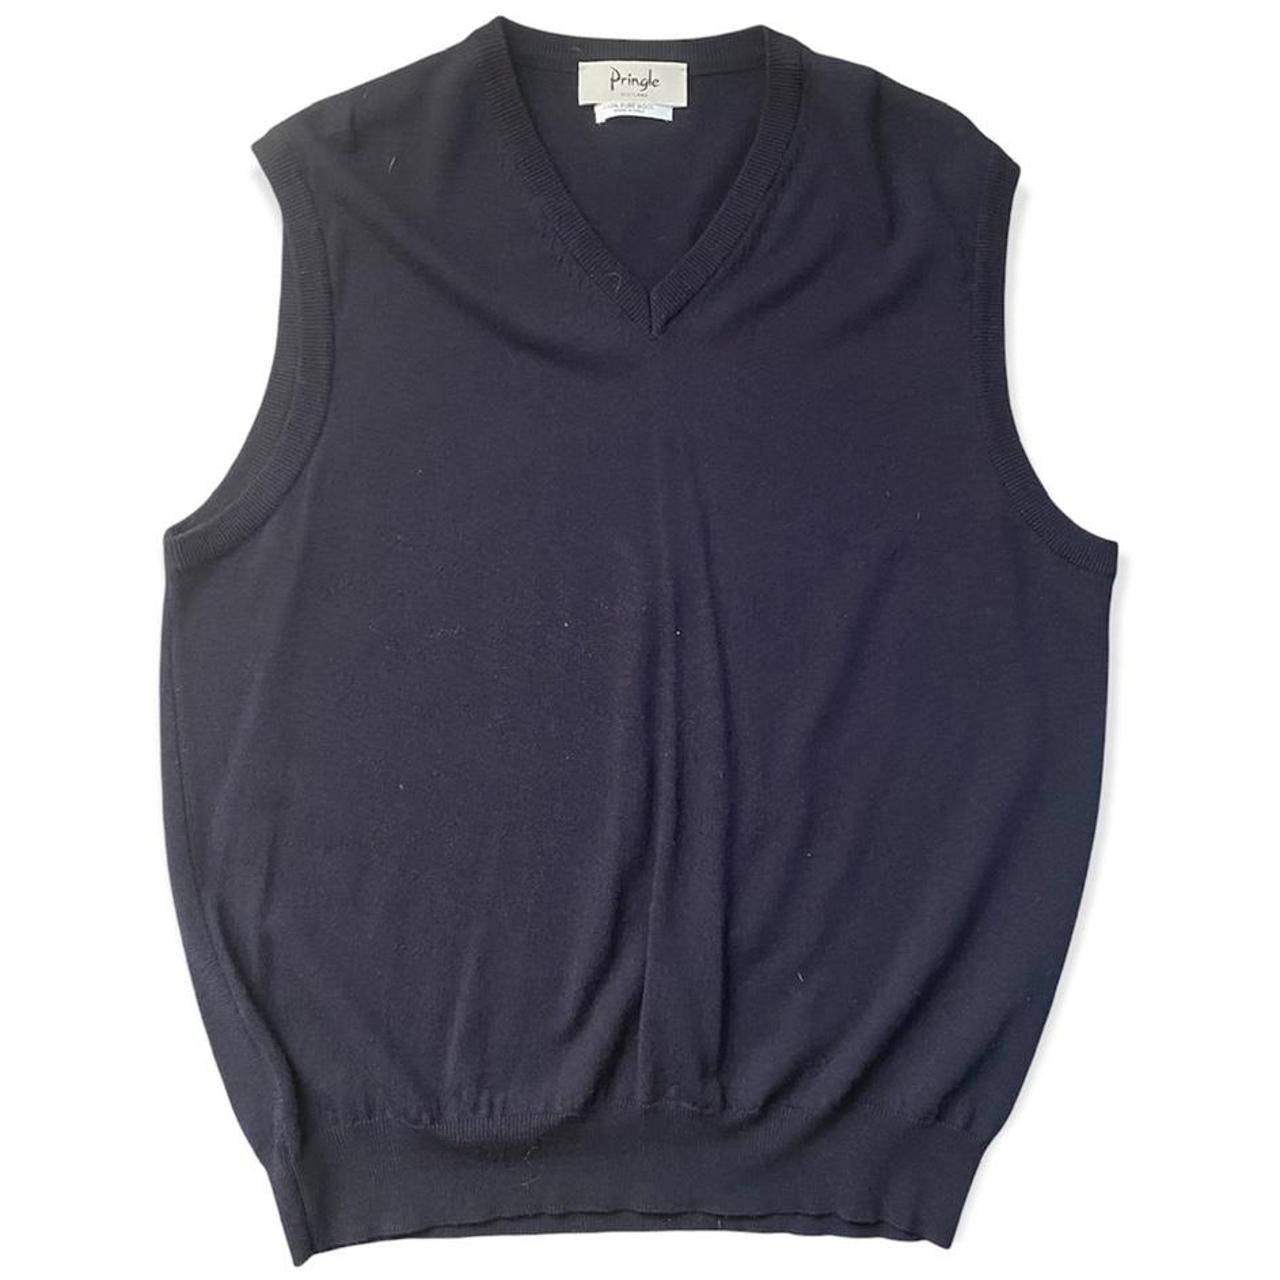 Product Image 1 - 100% wool Sweater vest. Black